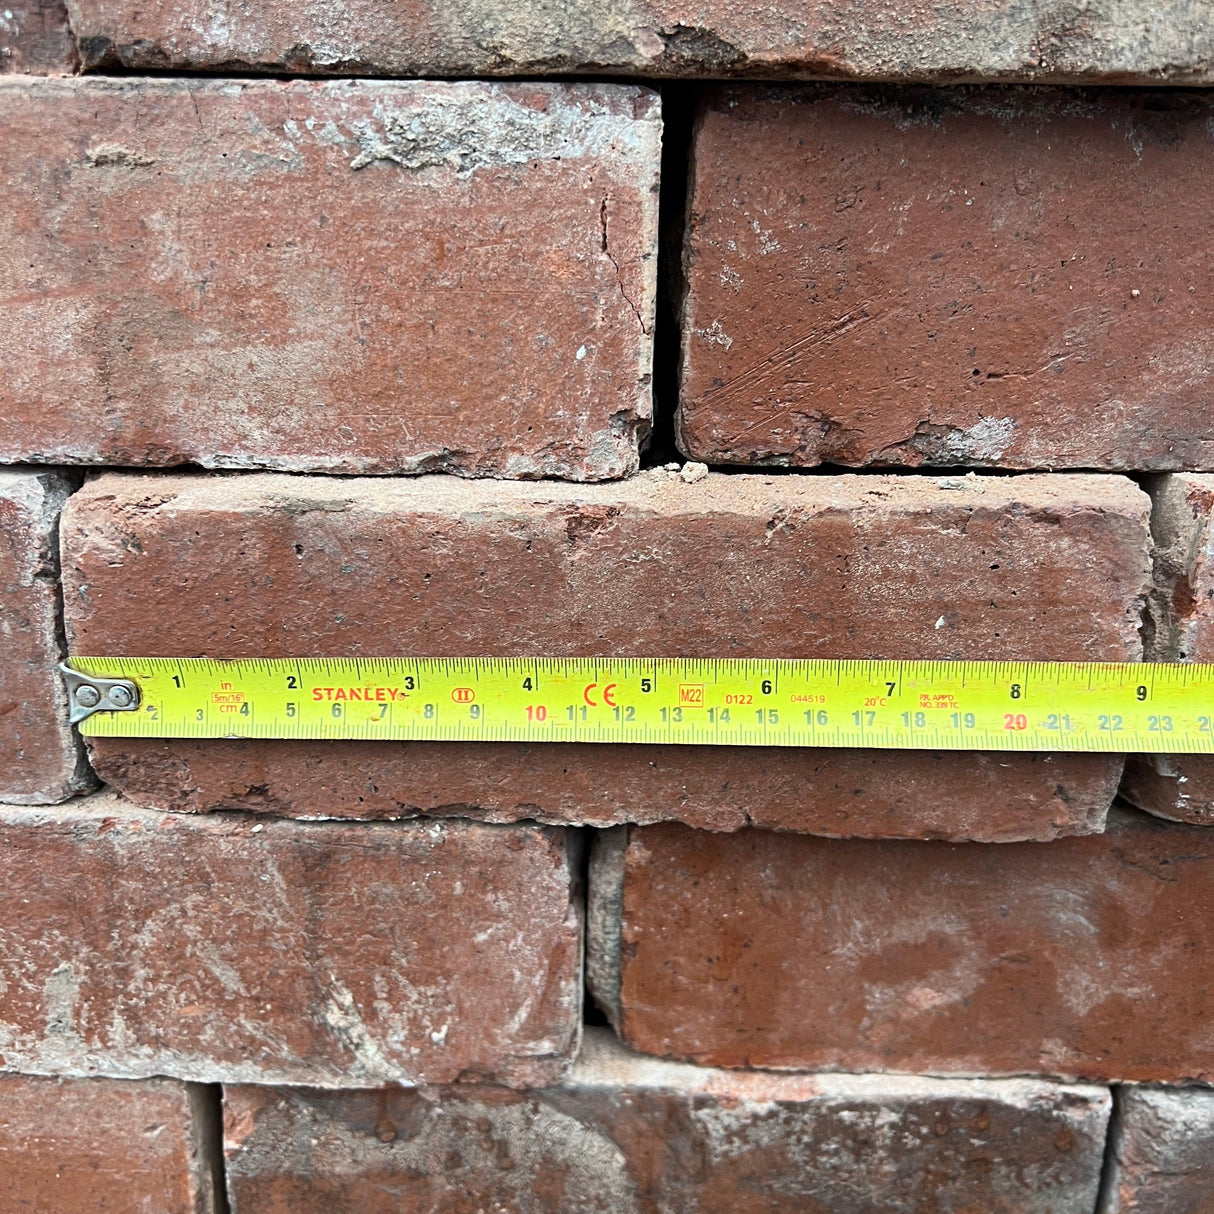 Rustic Red Brick Wall - Reclaimed Brick Company